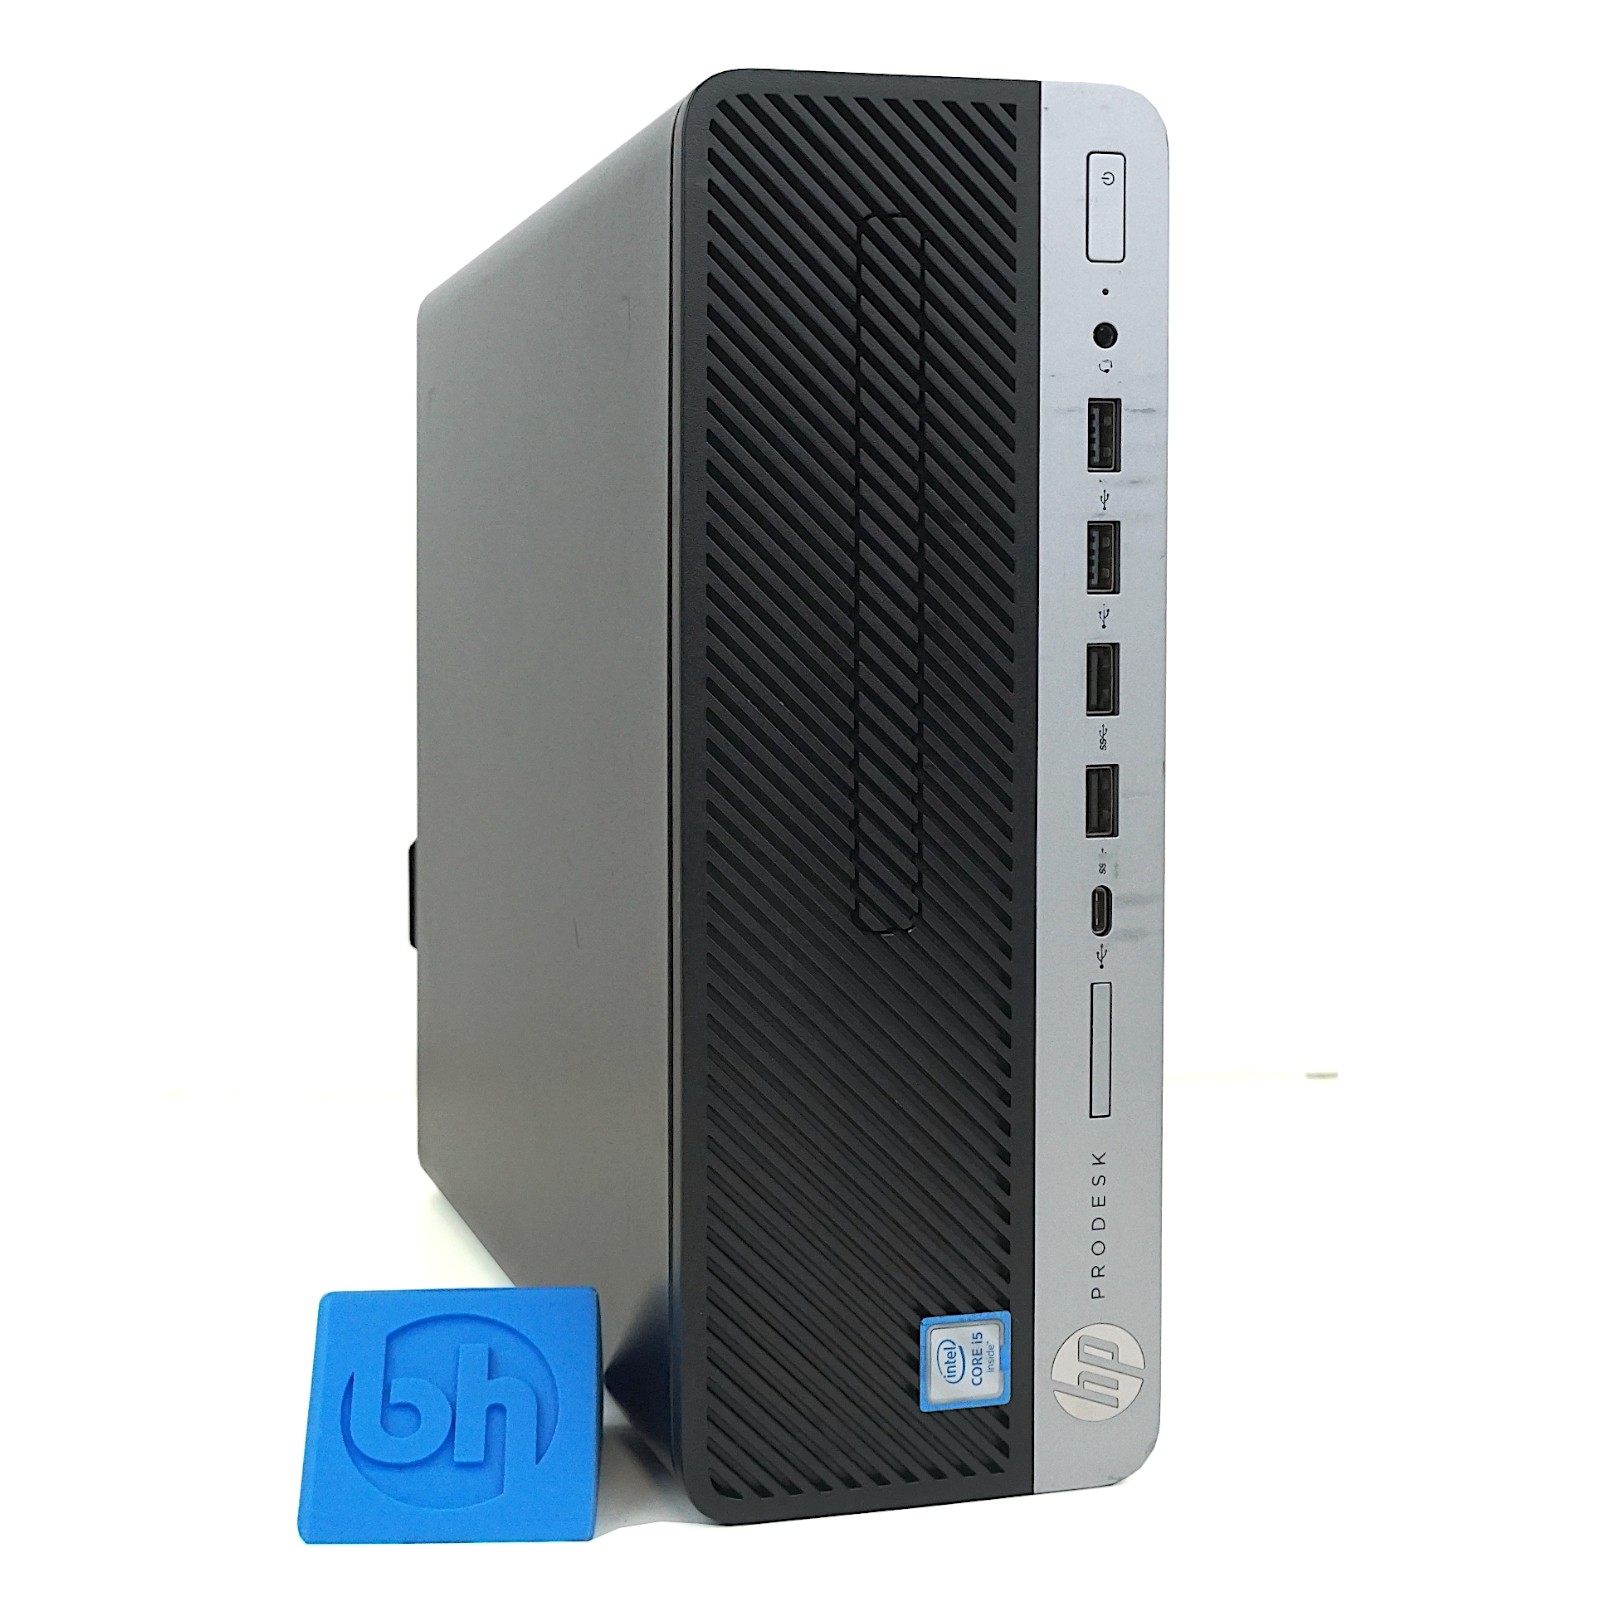 HP ProDesk 600 G3 SFF Pre-Configured Desktop PC